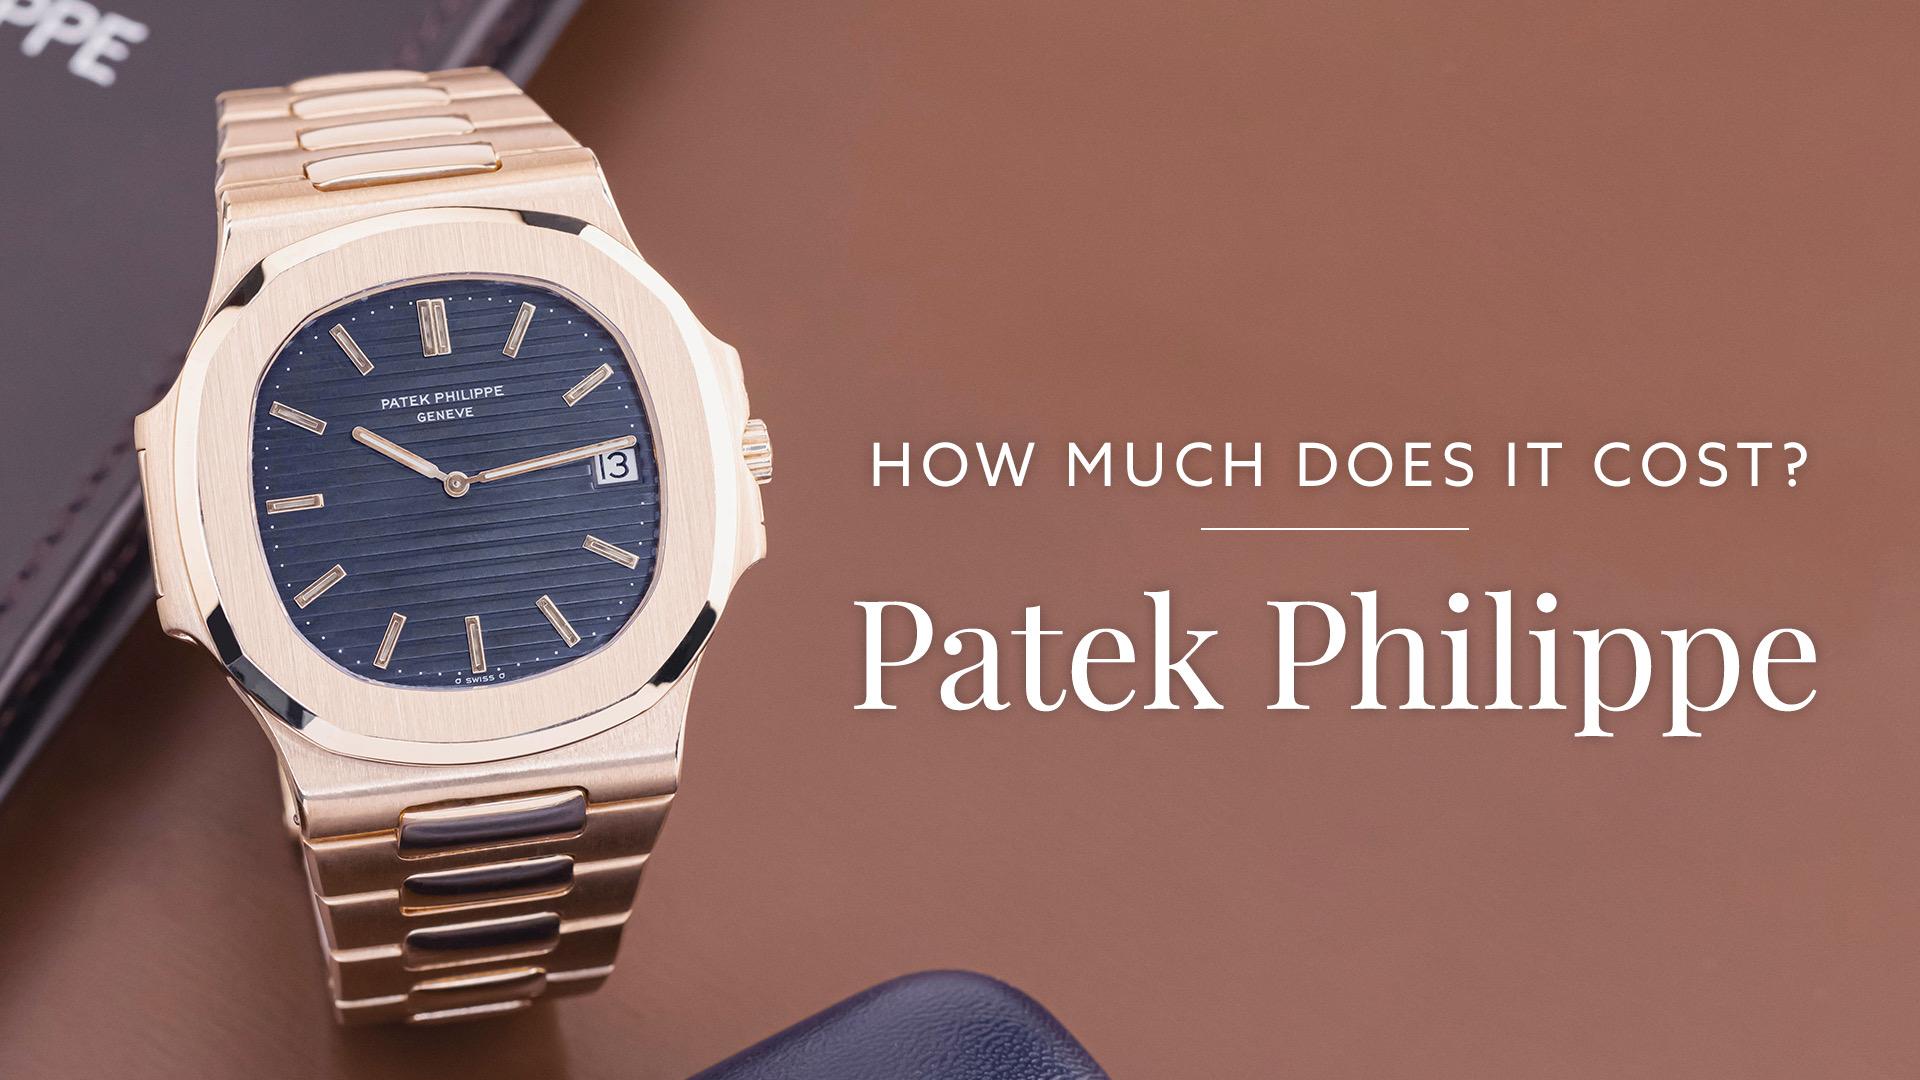 Patek Philippe Nautilus Price: How Much Does a Nautilus Cost?